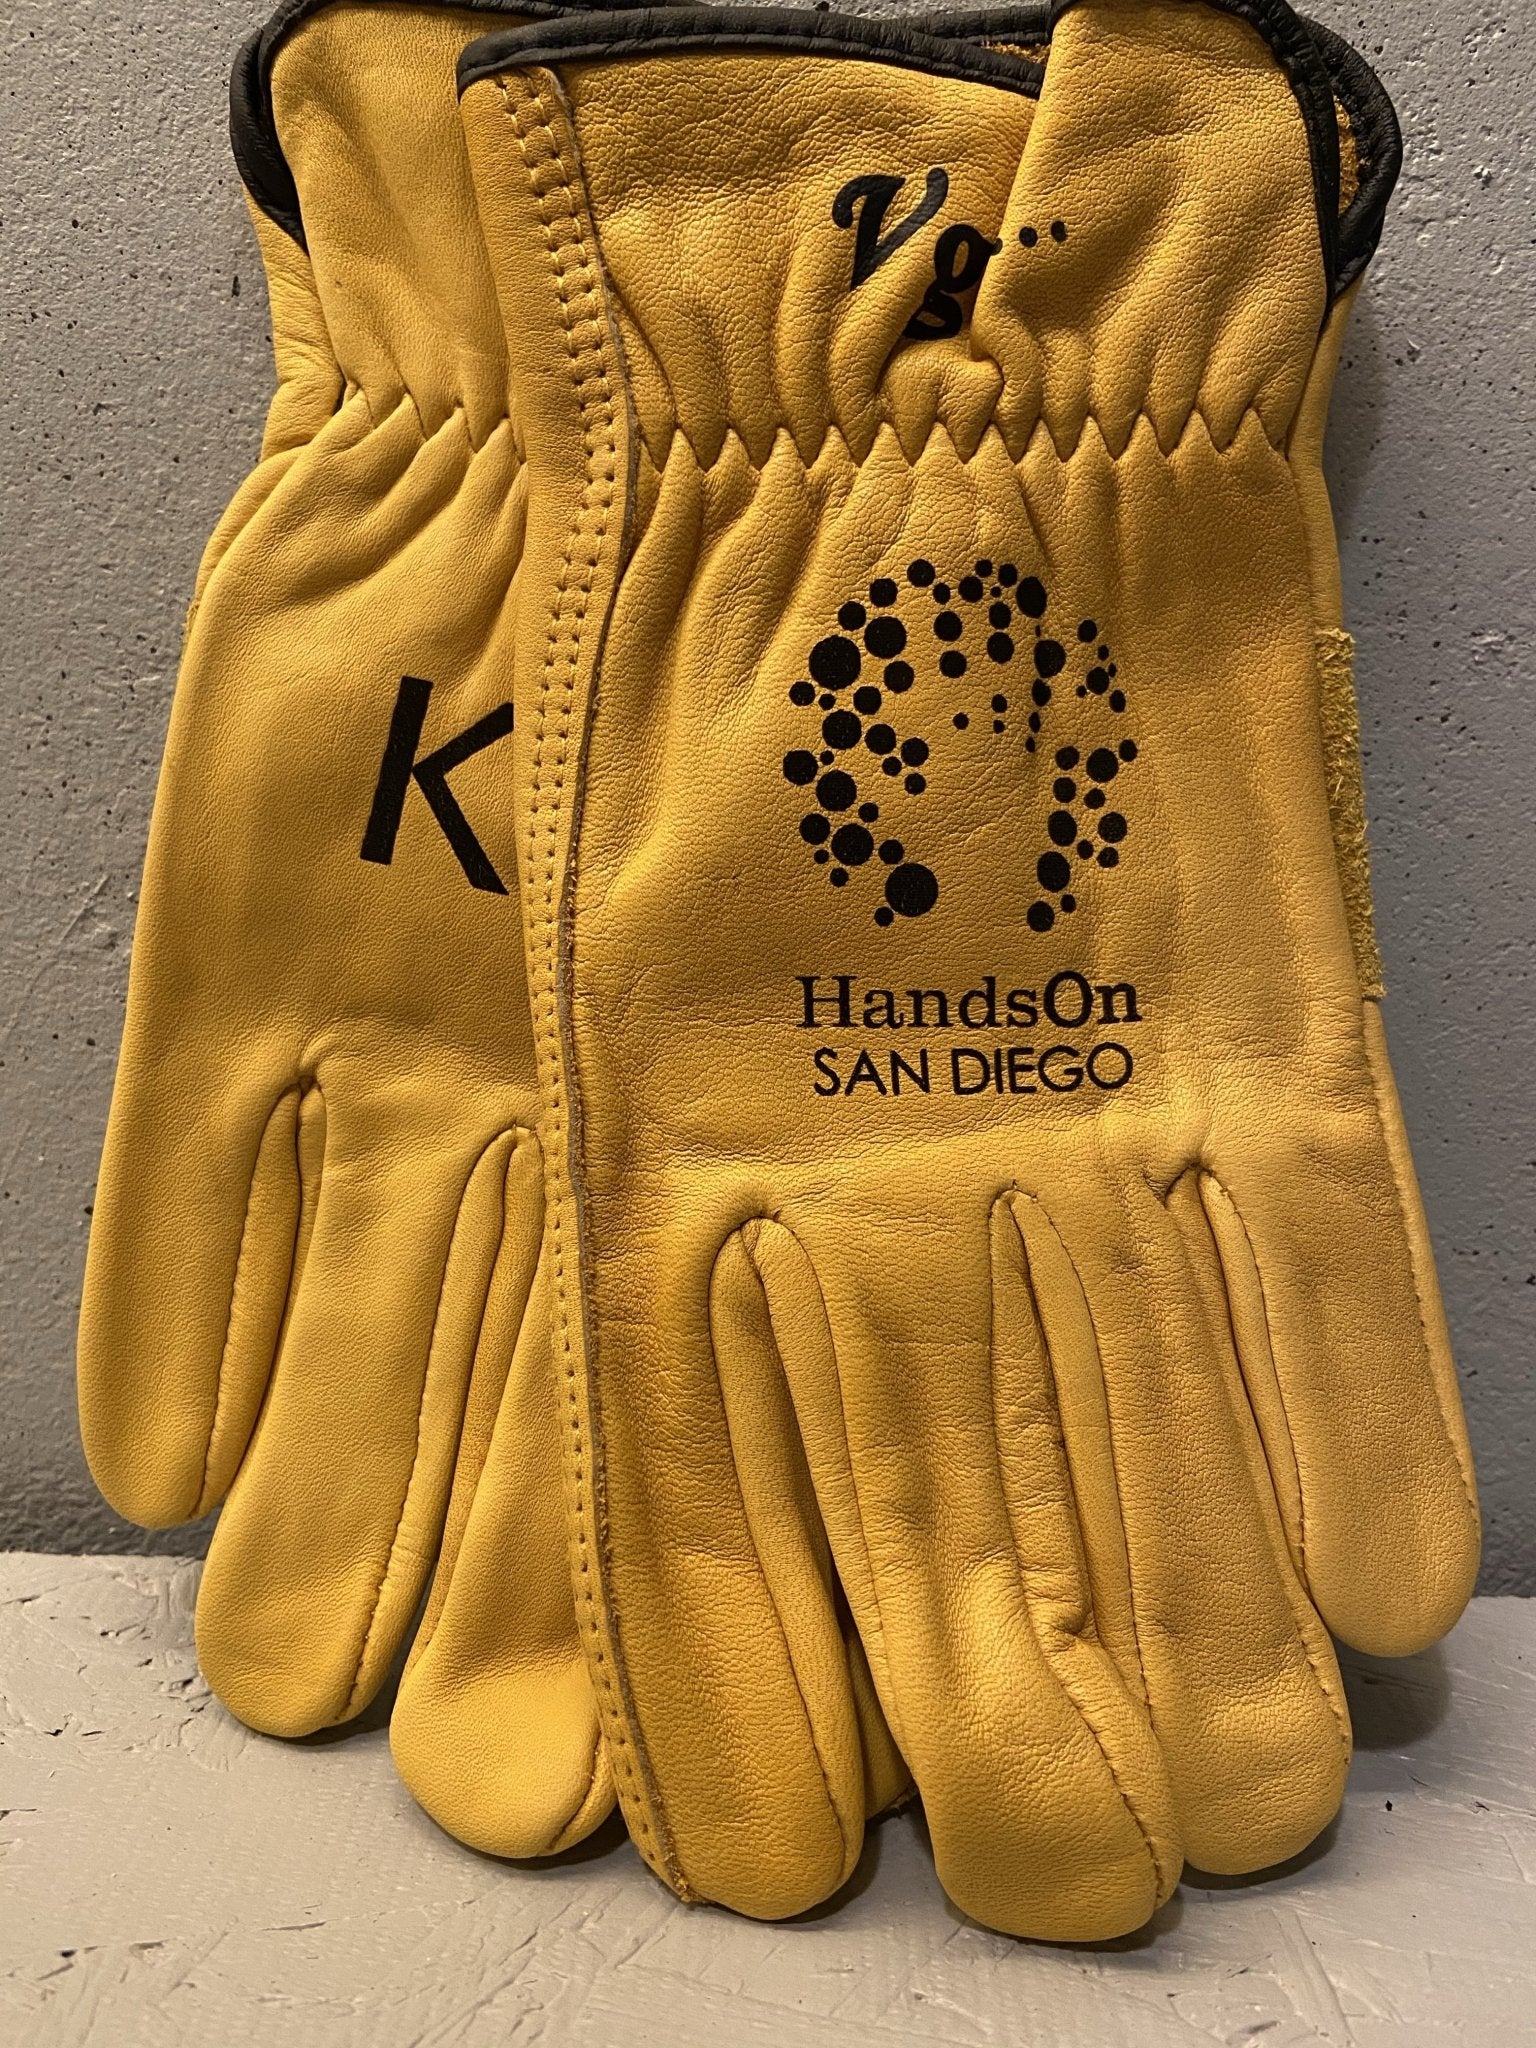 Kids Gloves, Children Gloves, Work Gloves, Customized Personalized